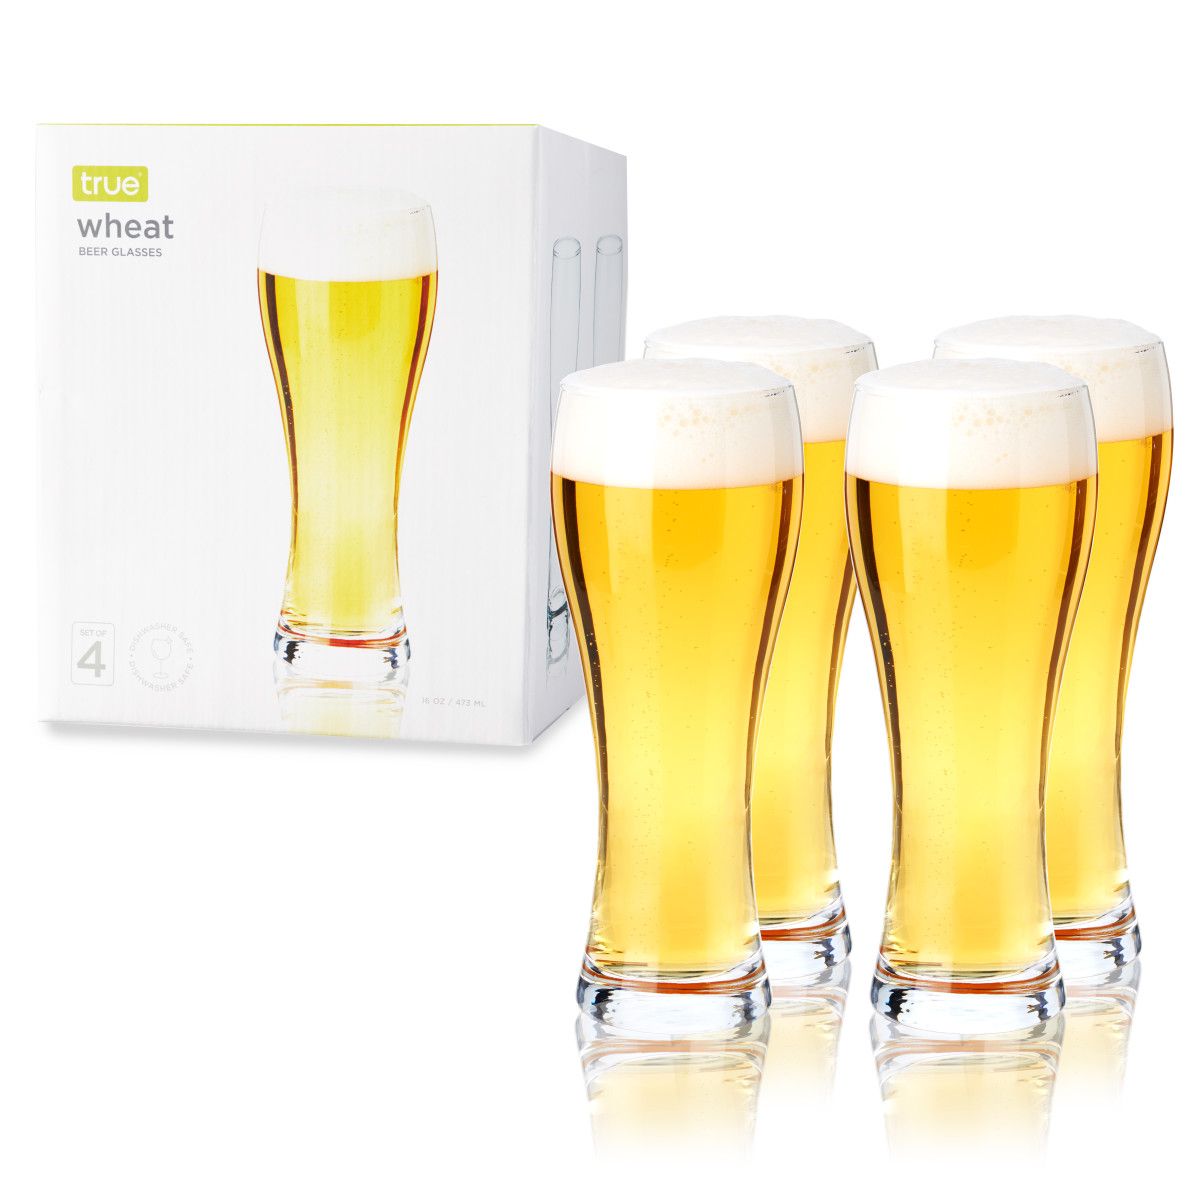 Fairway Tall Beer Glass - Set of 4